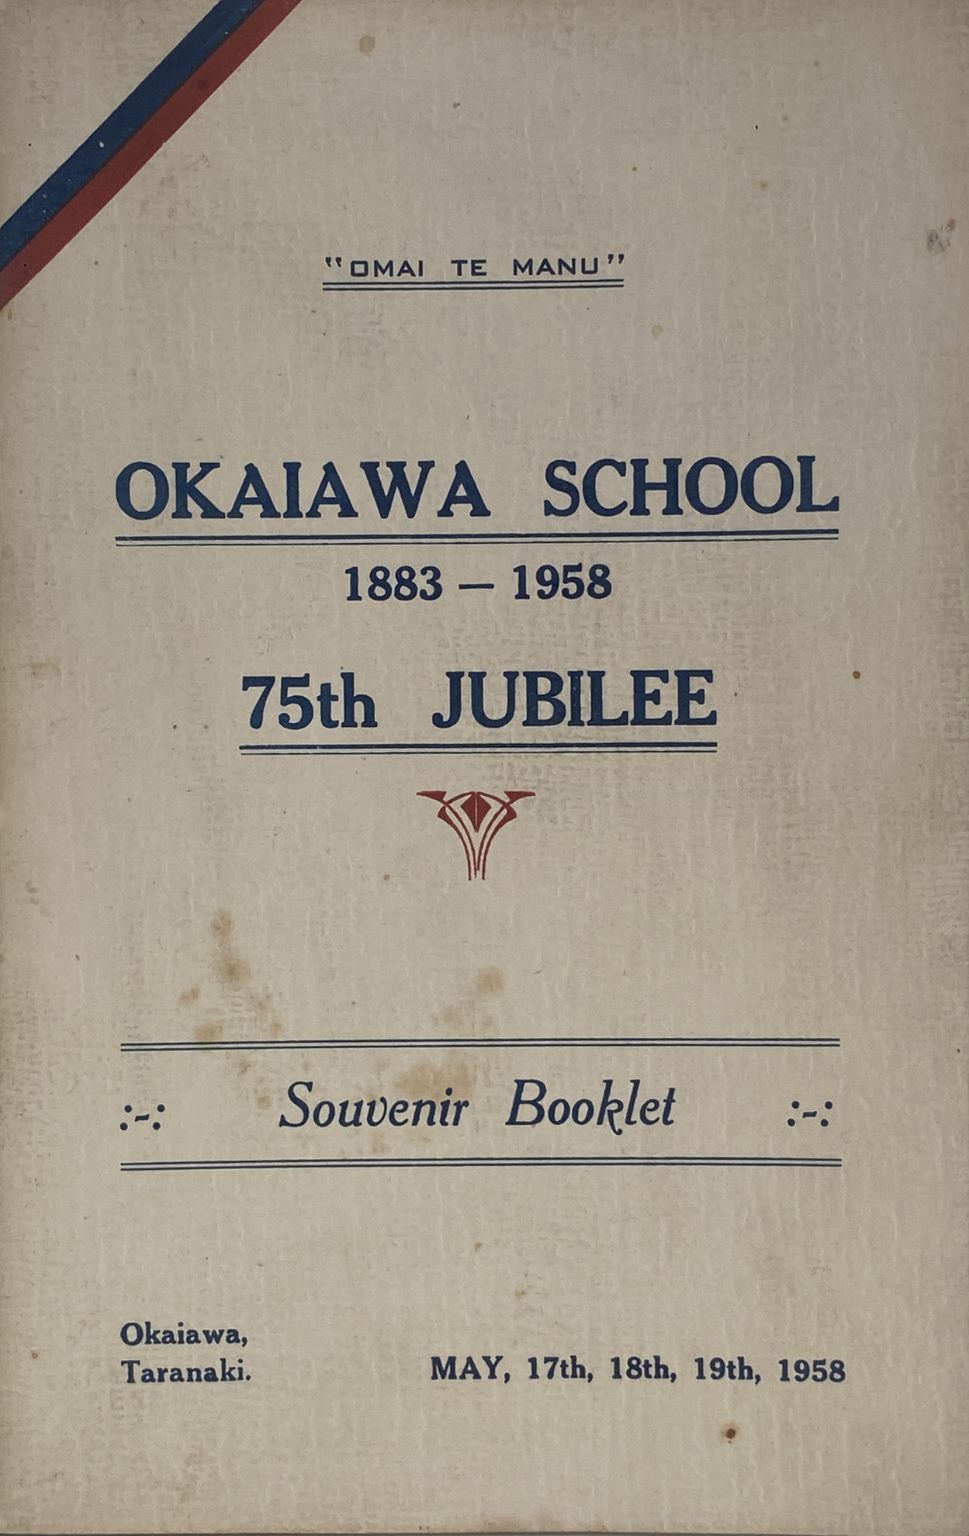 OKAIAWA SCHOOL CENTENNIAL 1883-1958 75th Jubilee - Souvenir Booklet